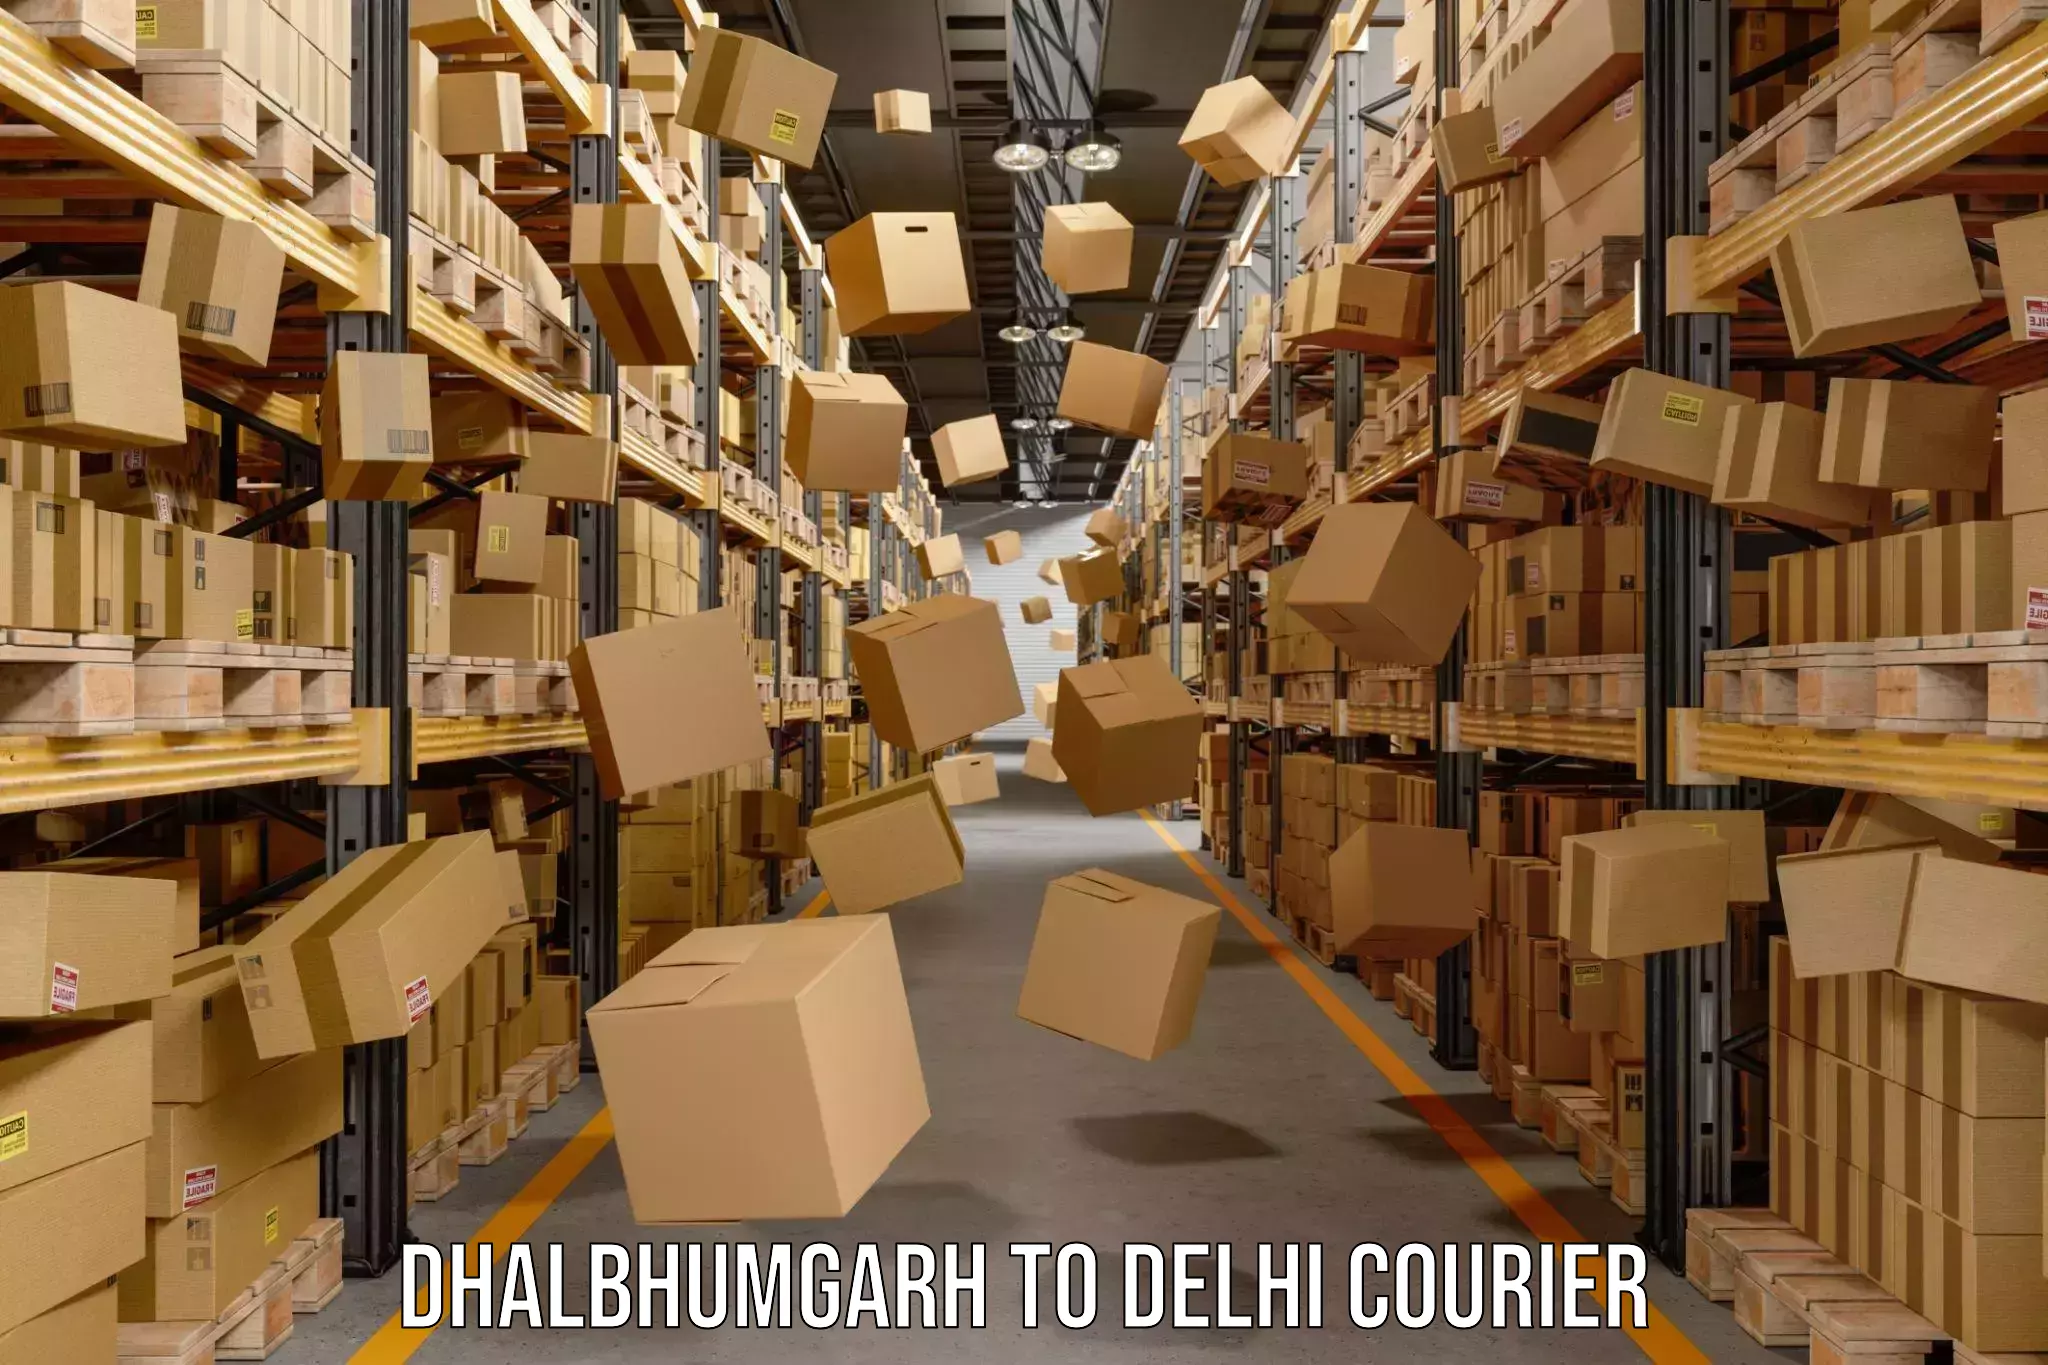 Courier service innovation Dhalbhumgarh to IIT Delhi